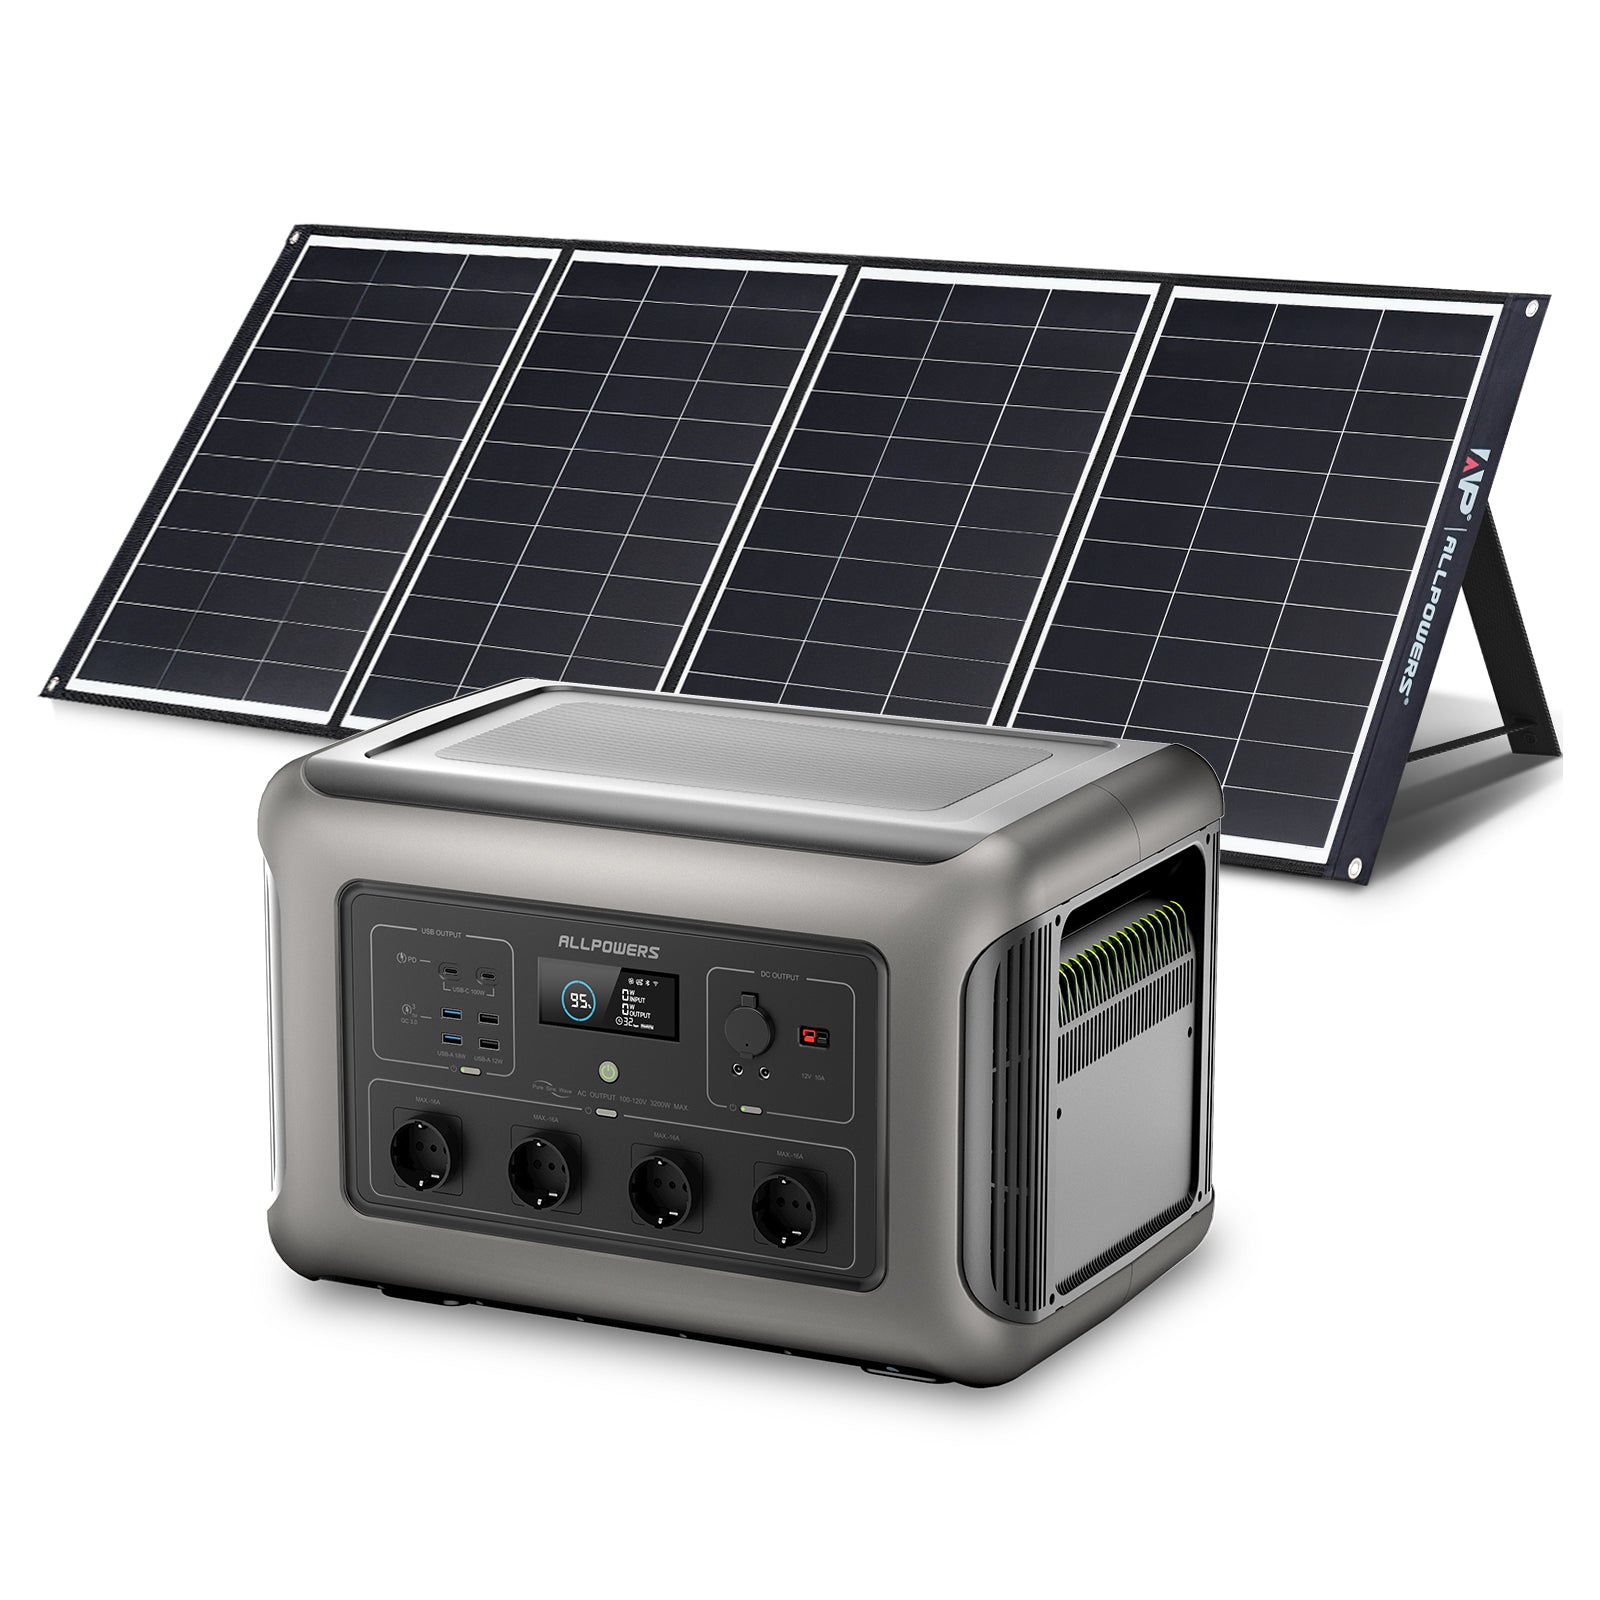 ALLPOWERS Solar Generator Kit 3500W (R3500 + SP035 200W Solar Panel with Monocrystalline Cell) 